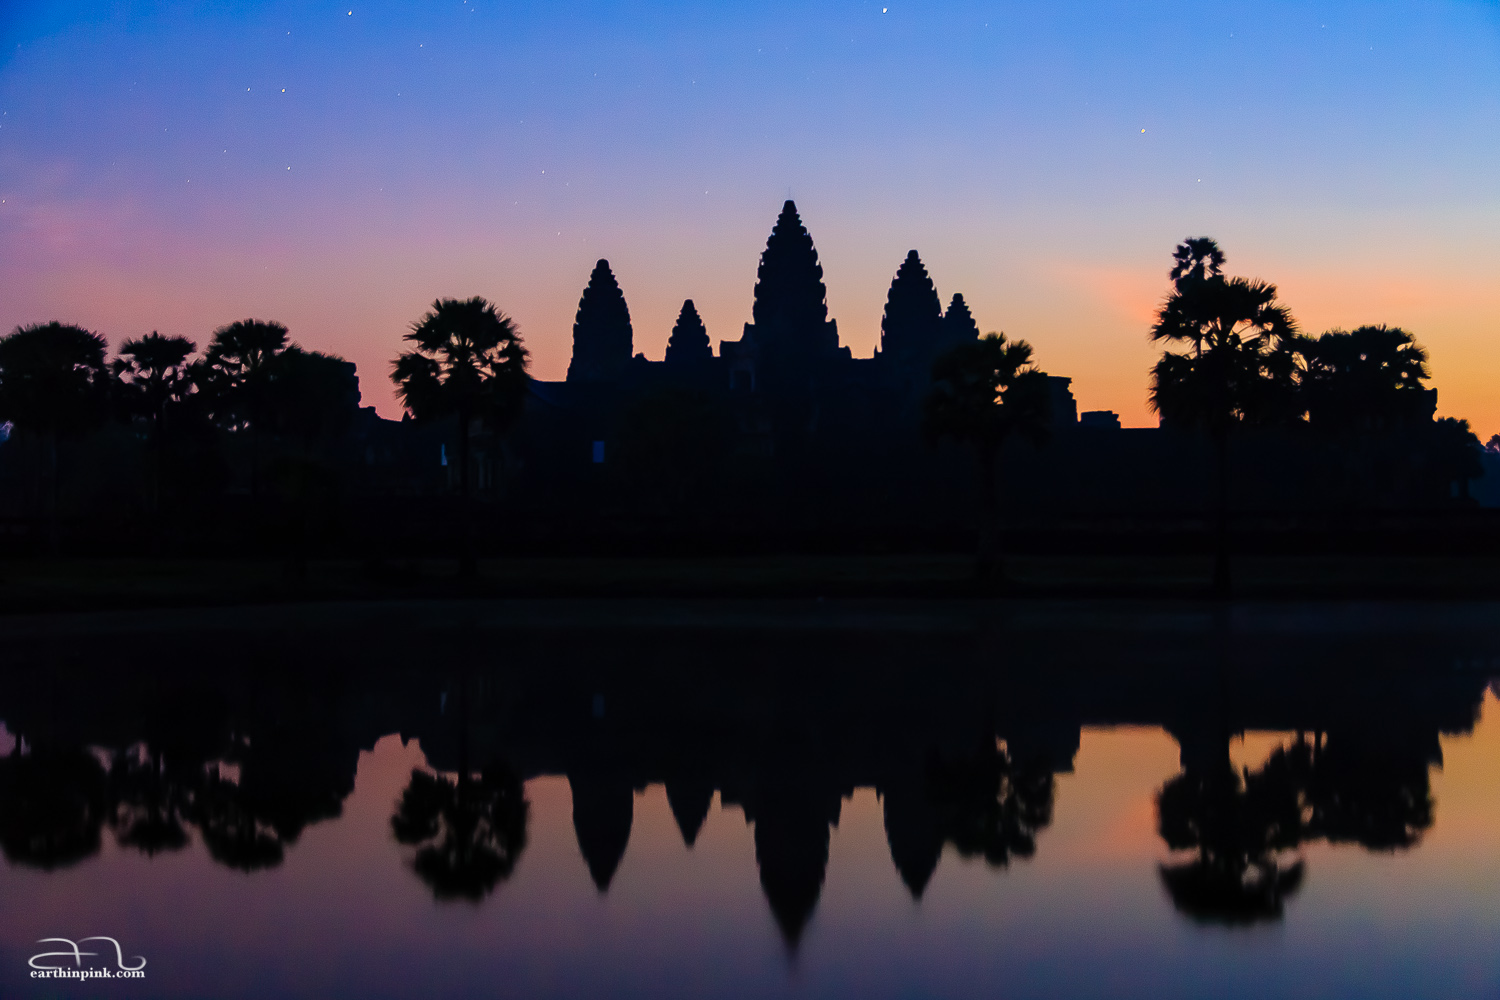 The obligatory "sunrise over Angkor Wat" photo-op.